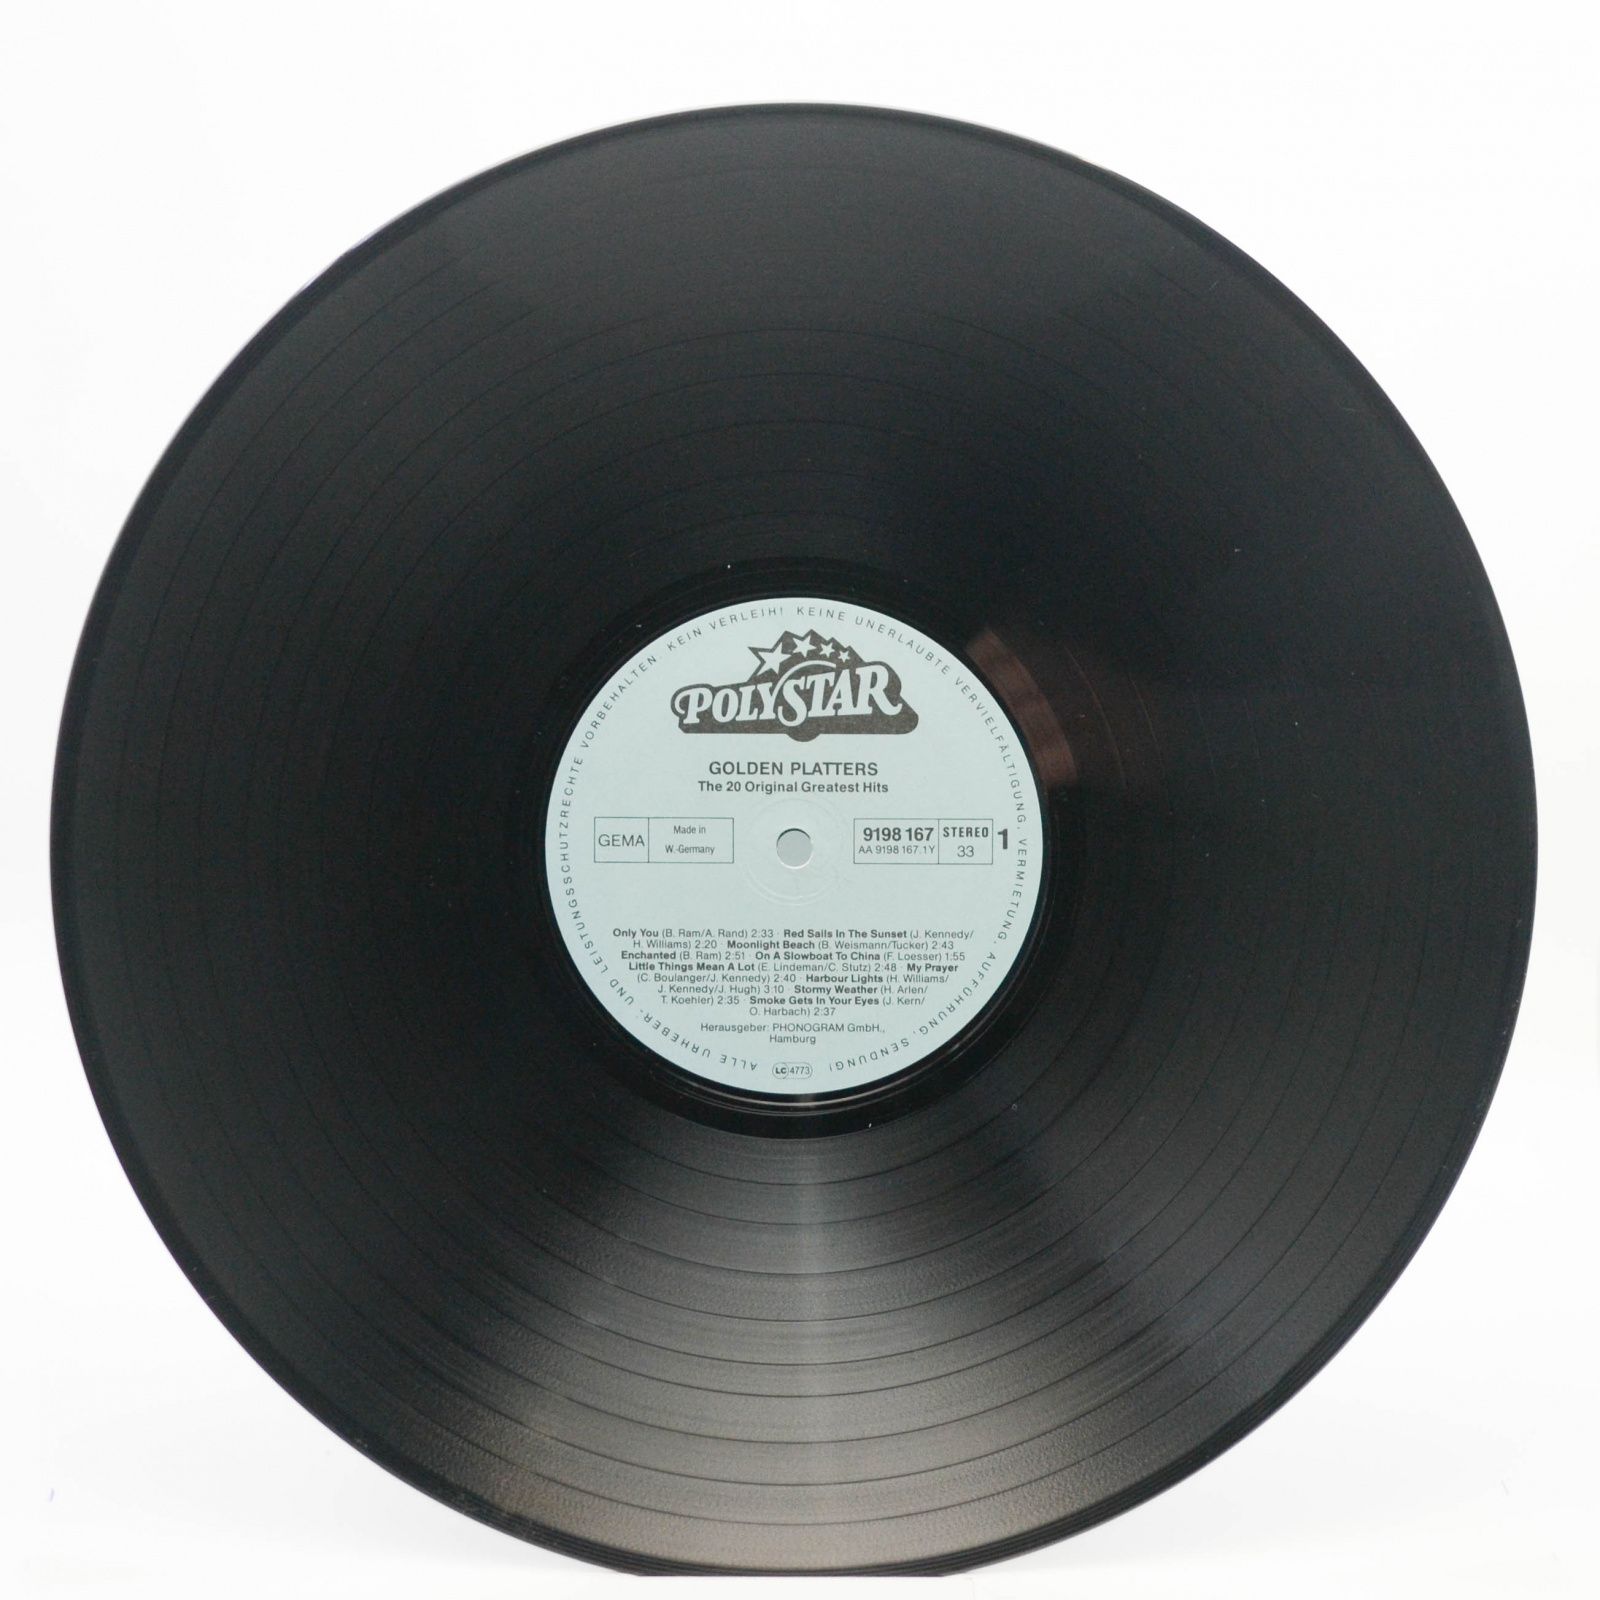 Platters — Golden Platters - The 20 Original Greatest Hits, 1979